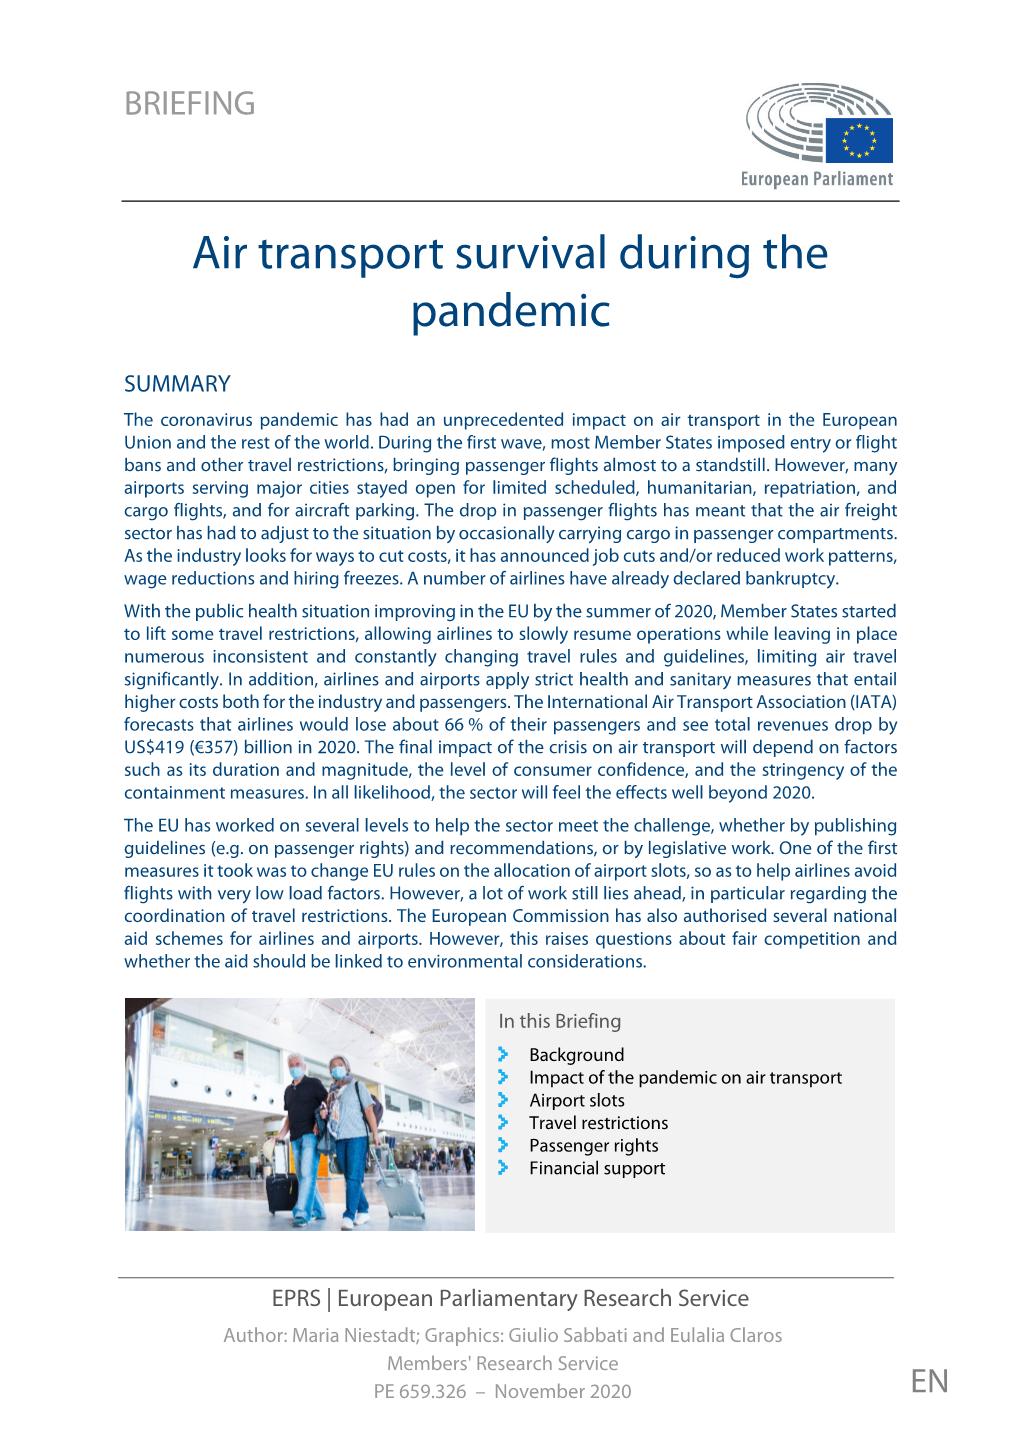 Air Transport Survival During Pandemic